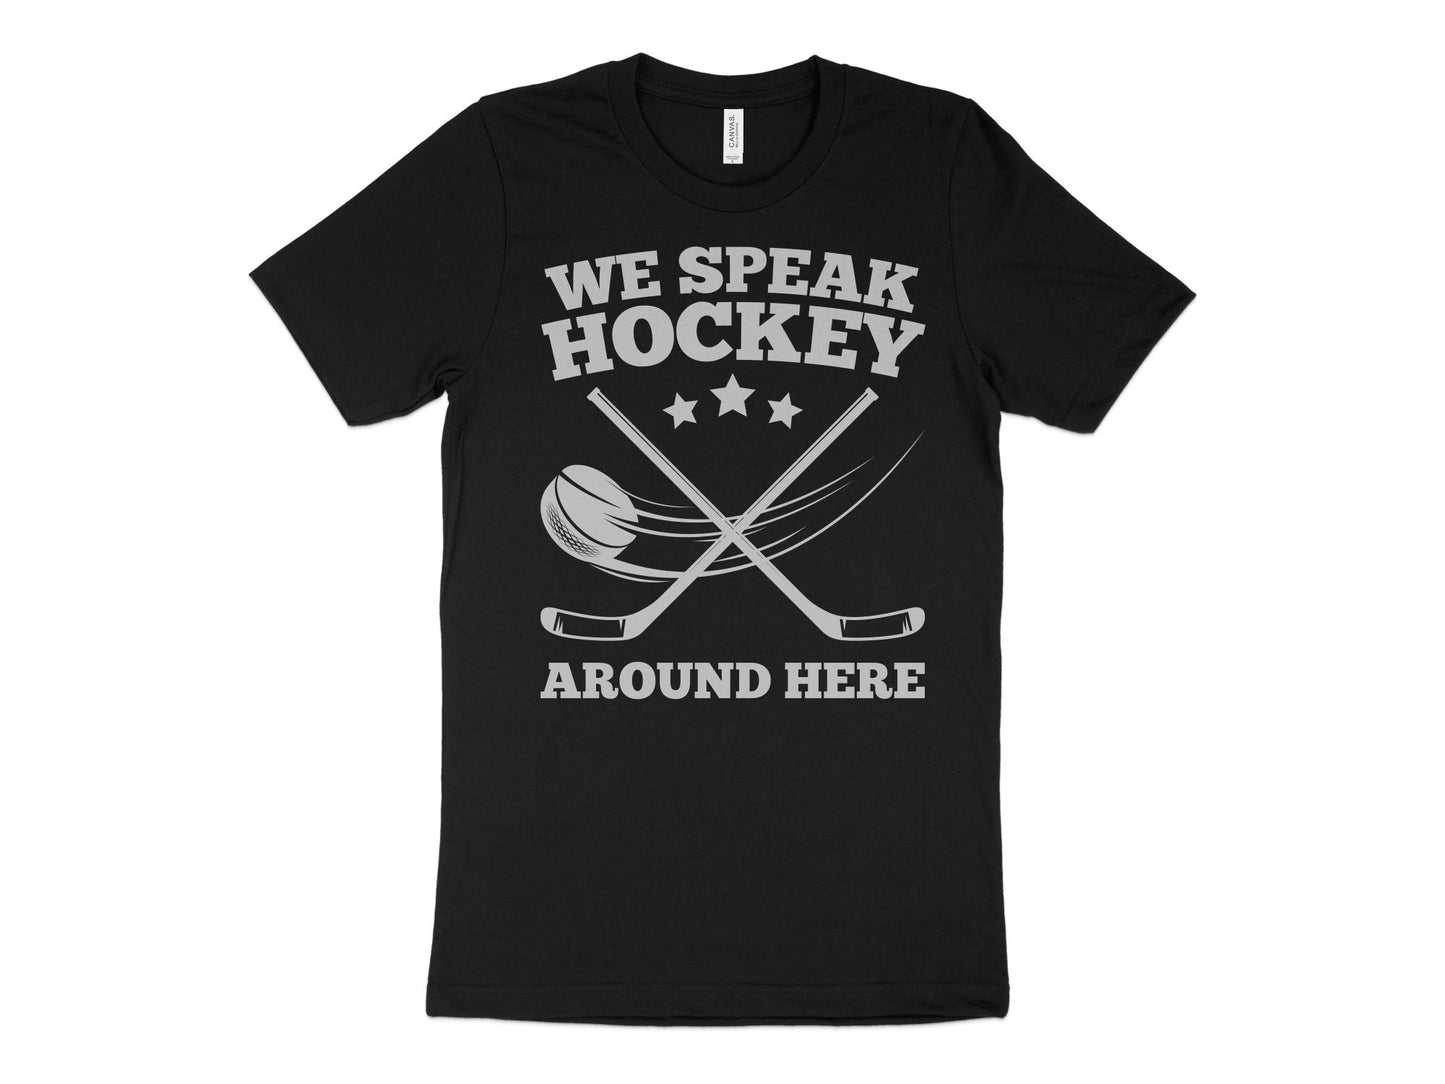 Funny Hockey Shirt - We Speak Hockey Around Here, black